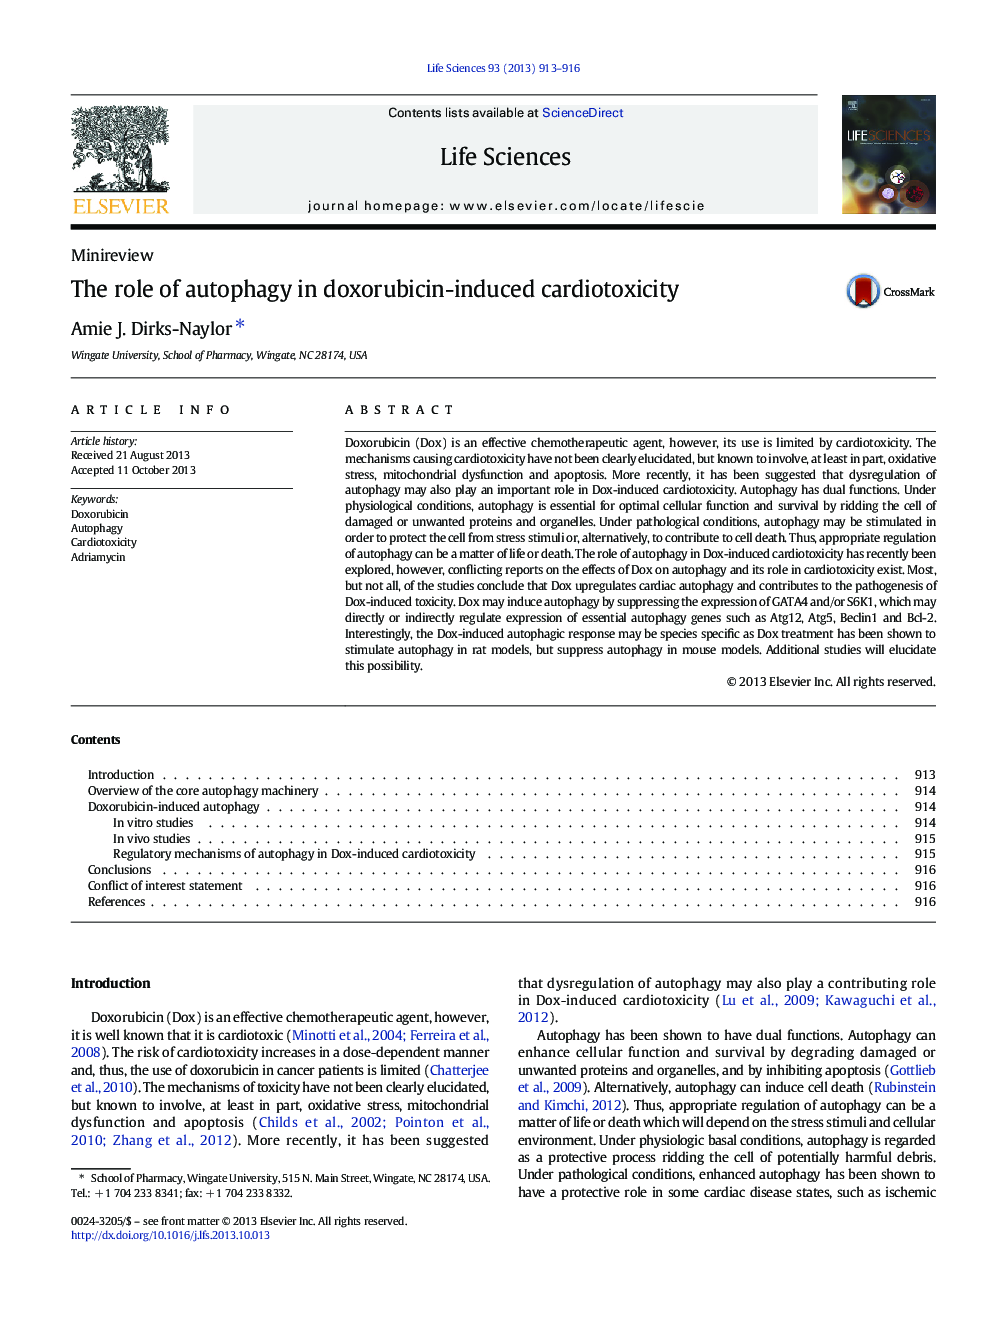 The role of autophagy in doxorubicin-induced cardiotoxicity